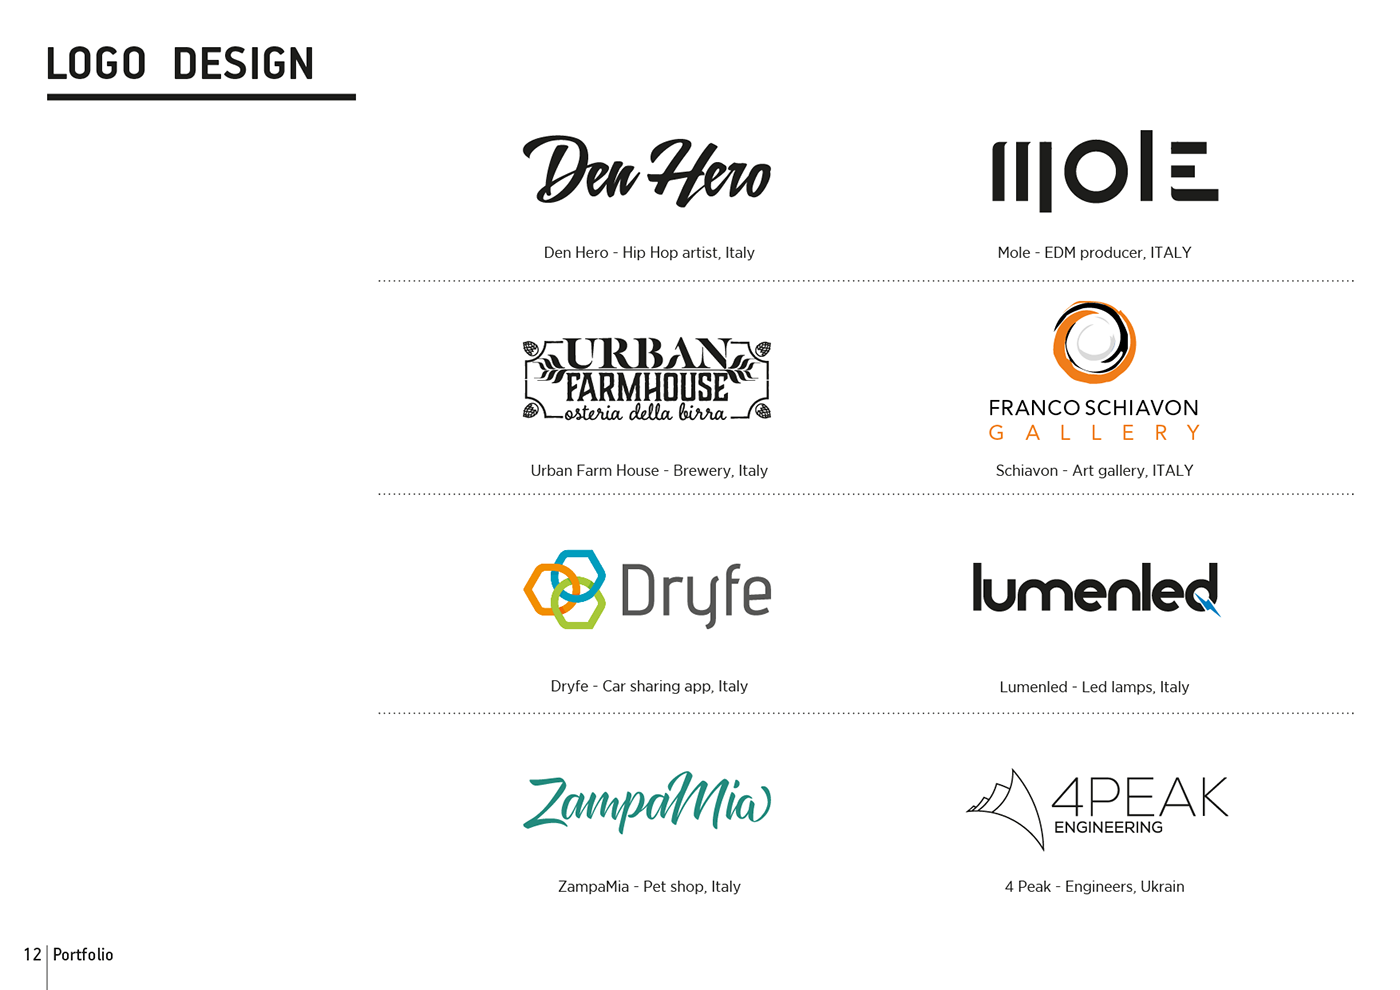 marco natolli portfolio Sushi Design Studio graphic design 